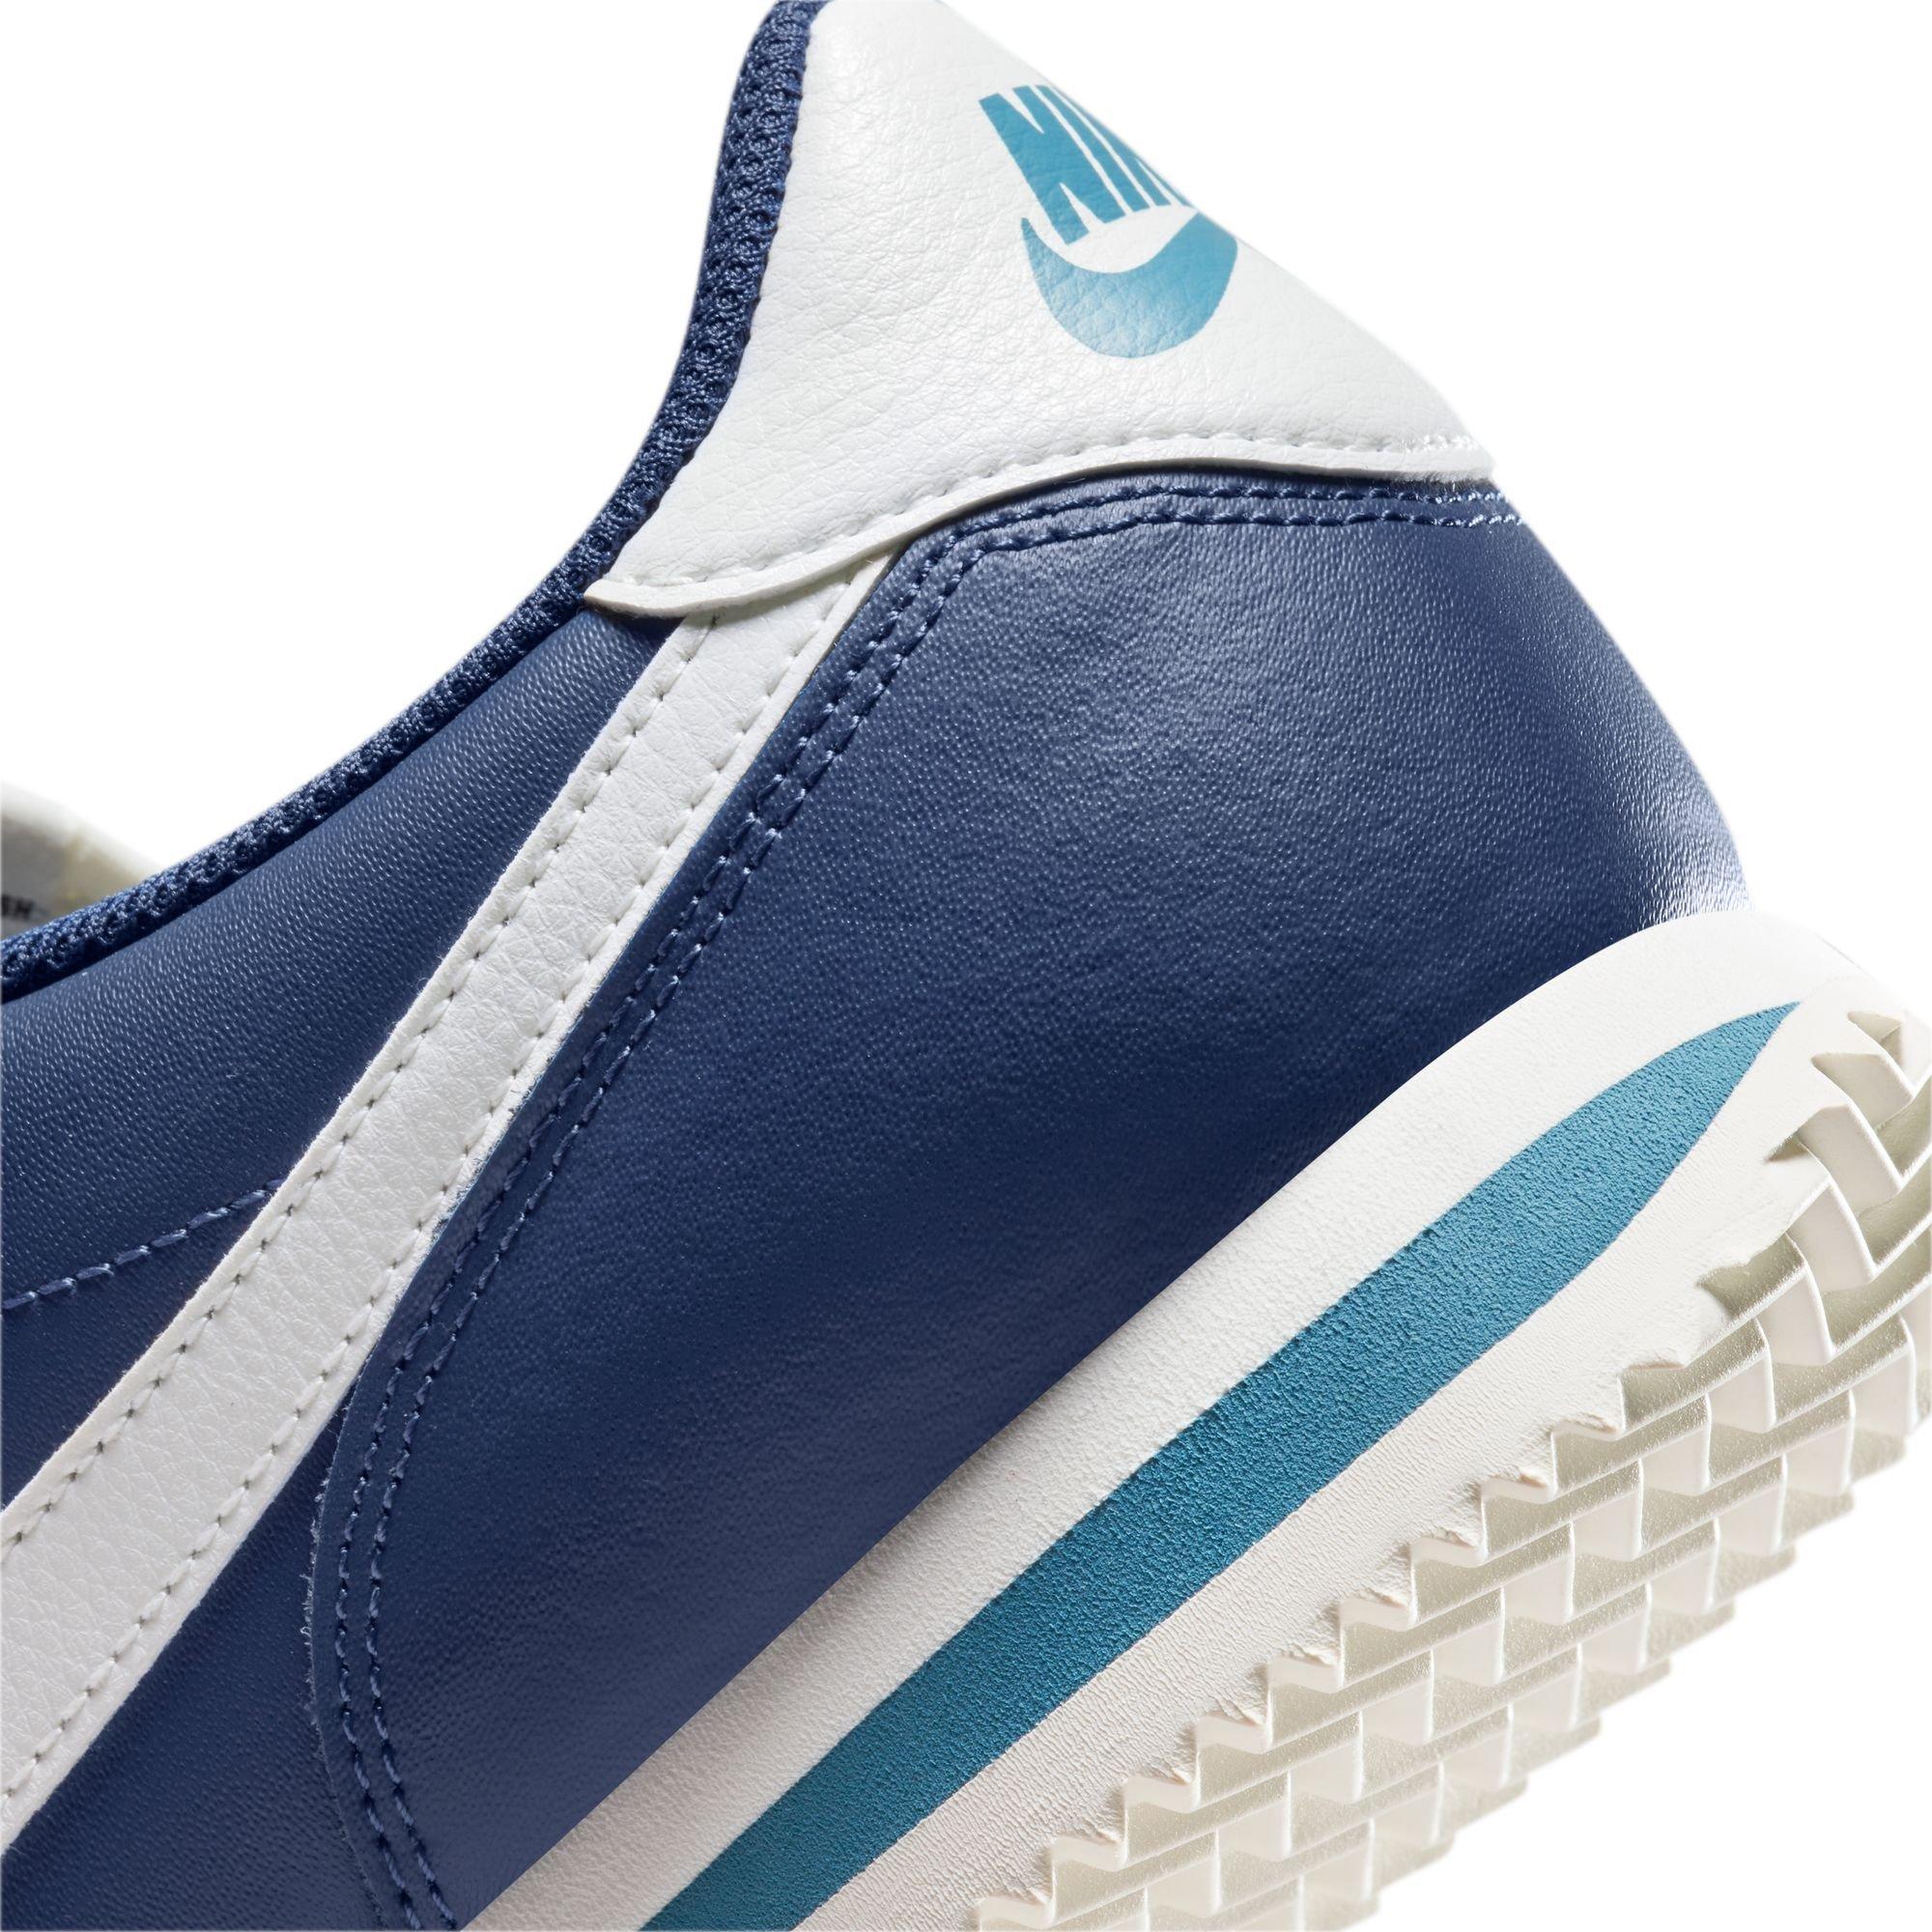 Nike Cortez "Midnight Aqua" Shoe